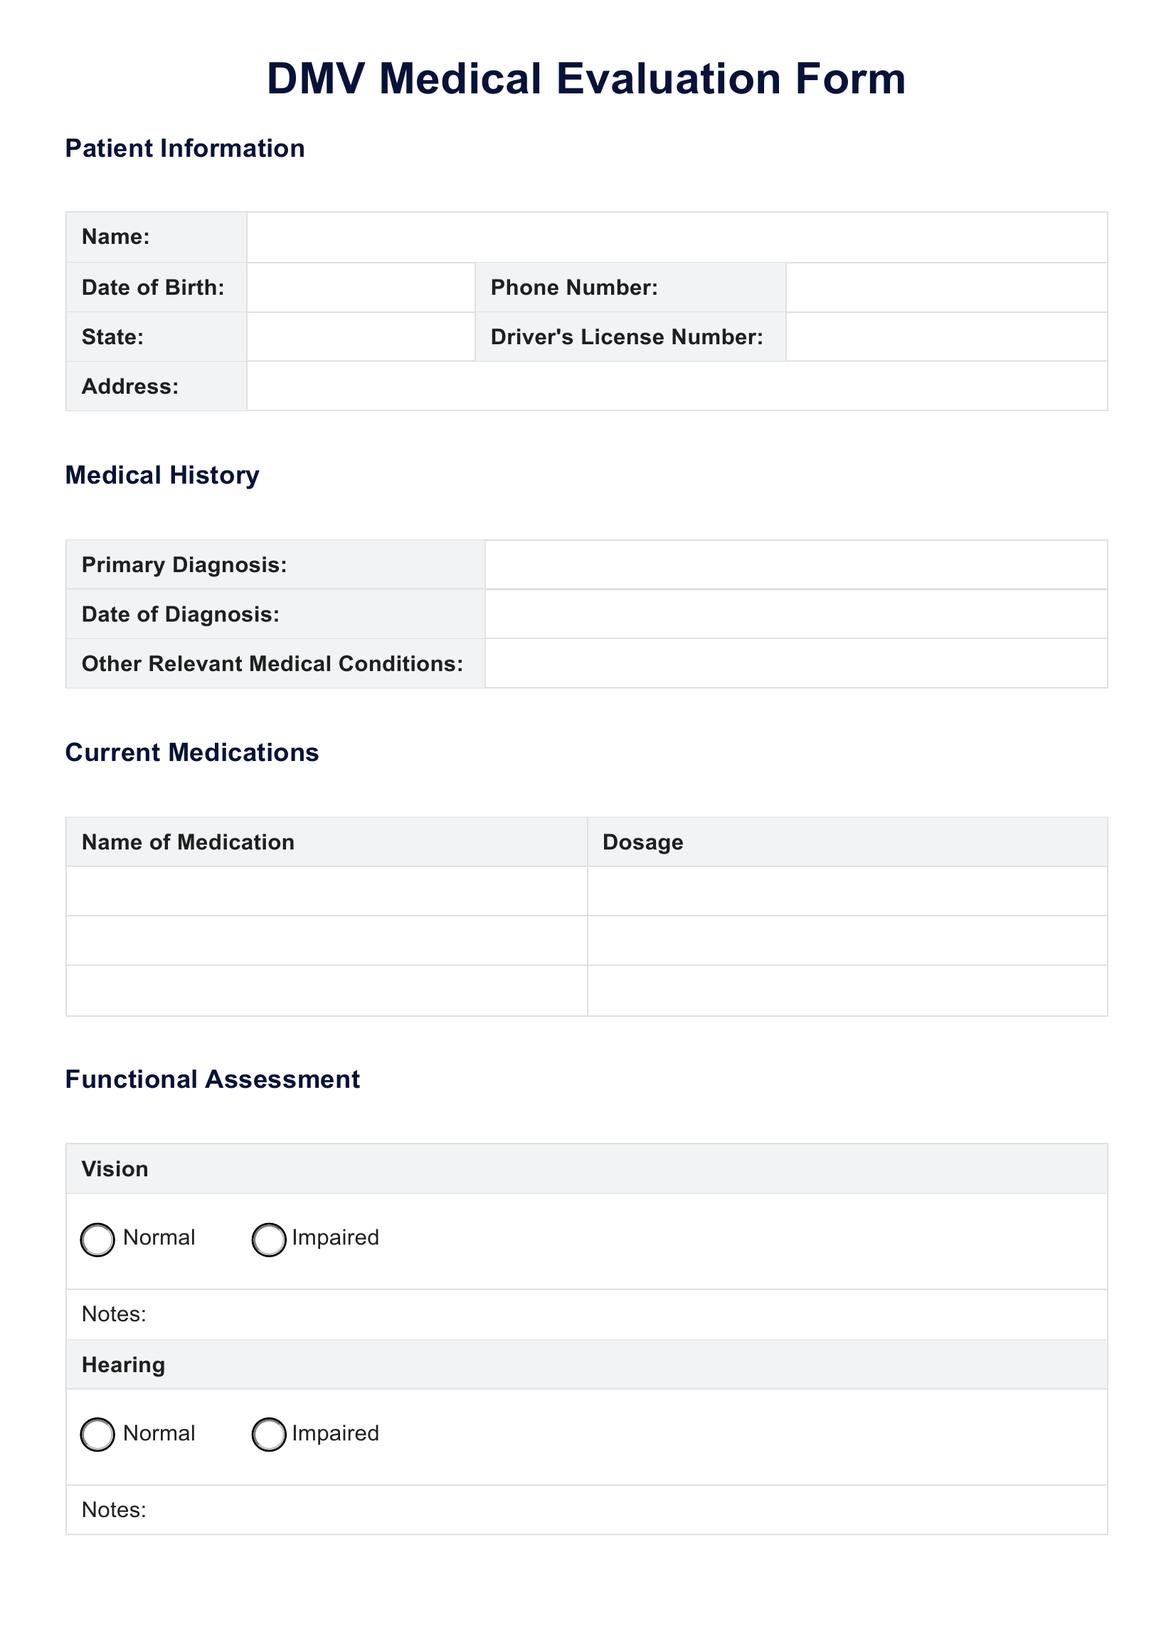 DMV Medical Evaluation Form PDF Example